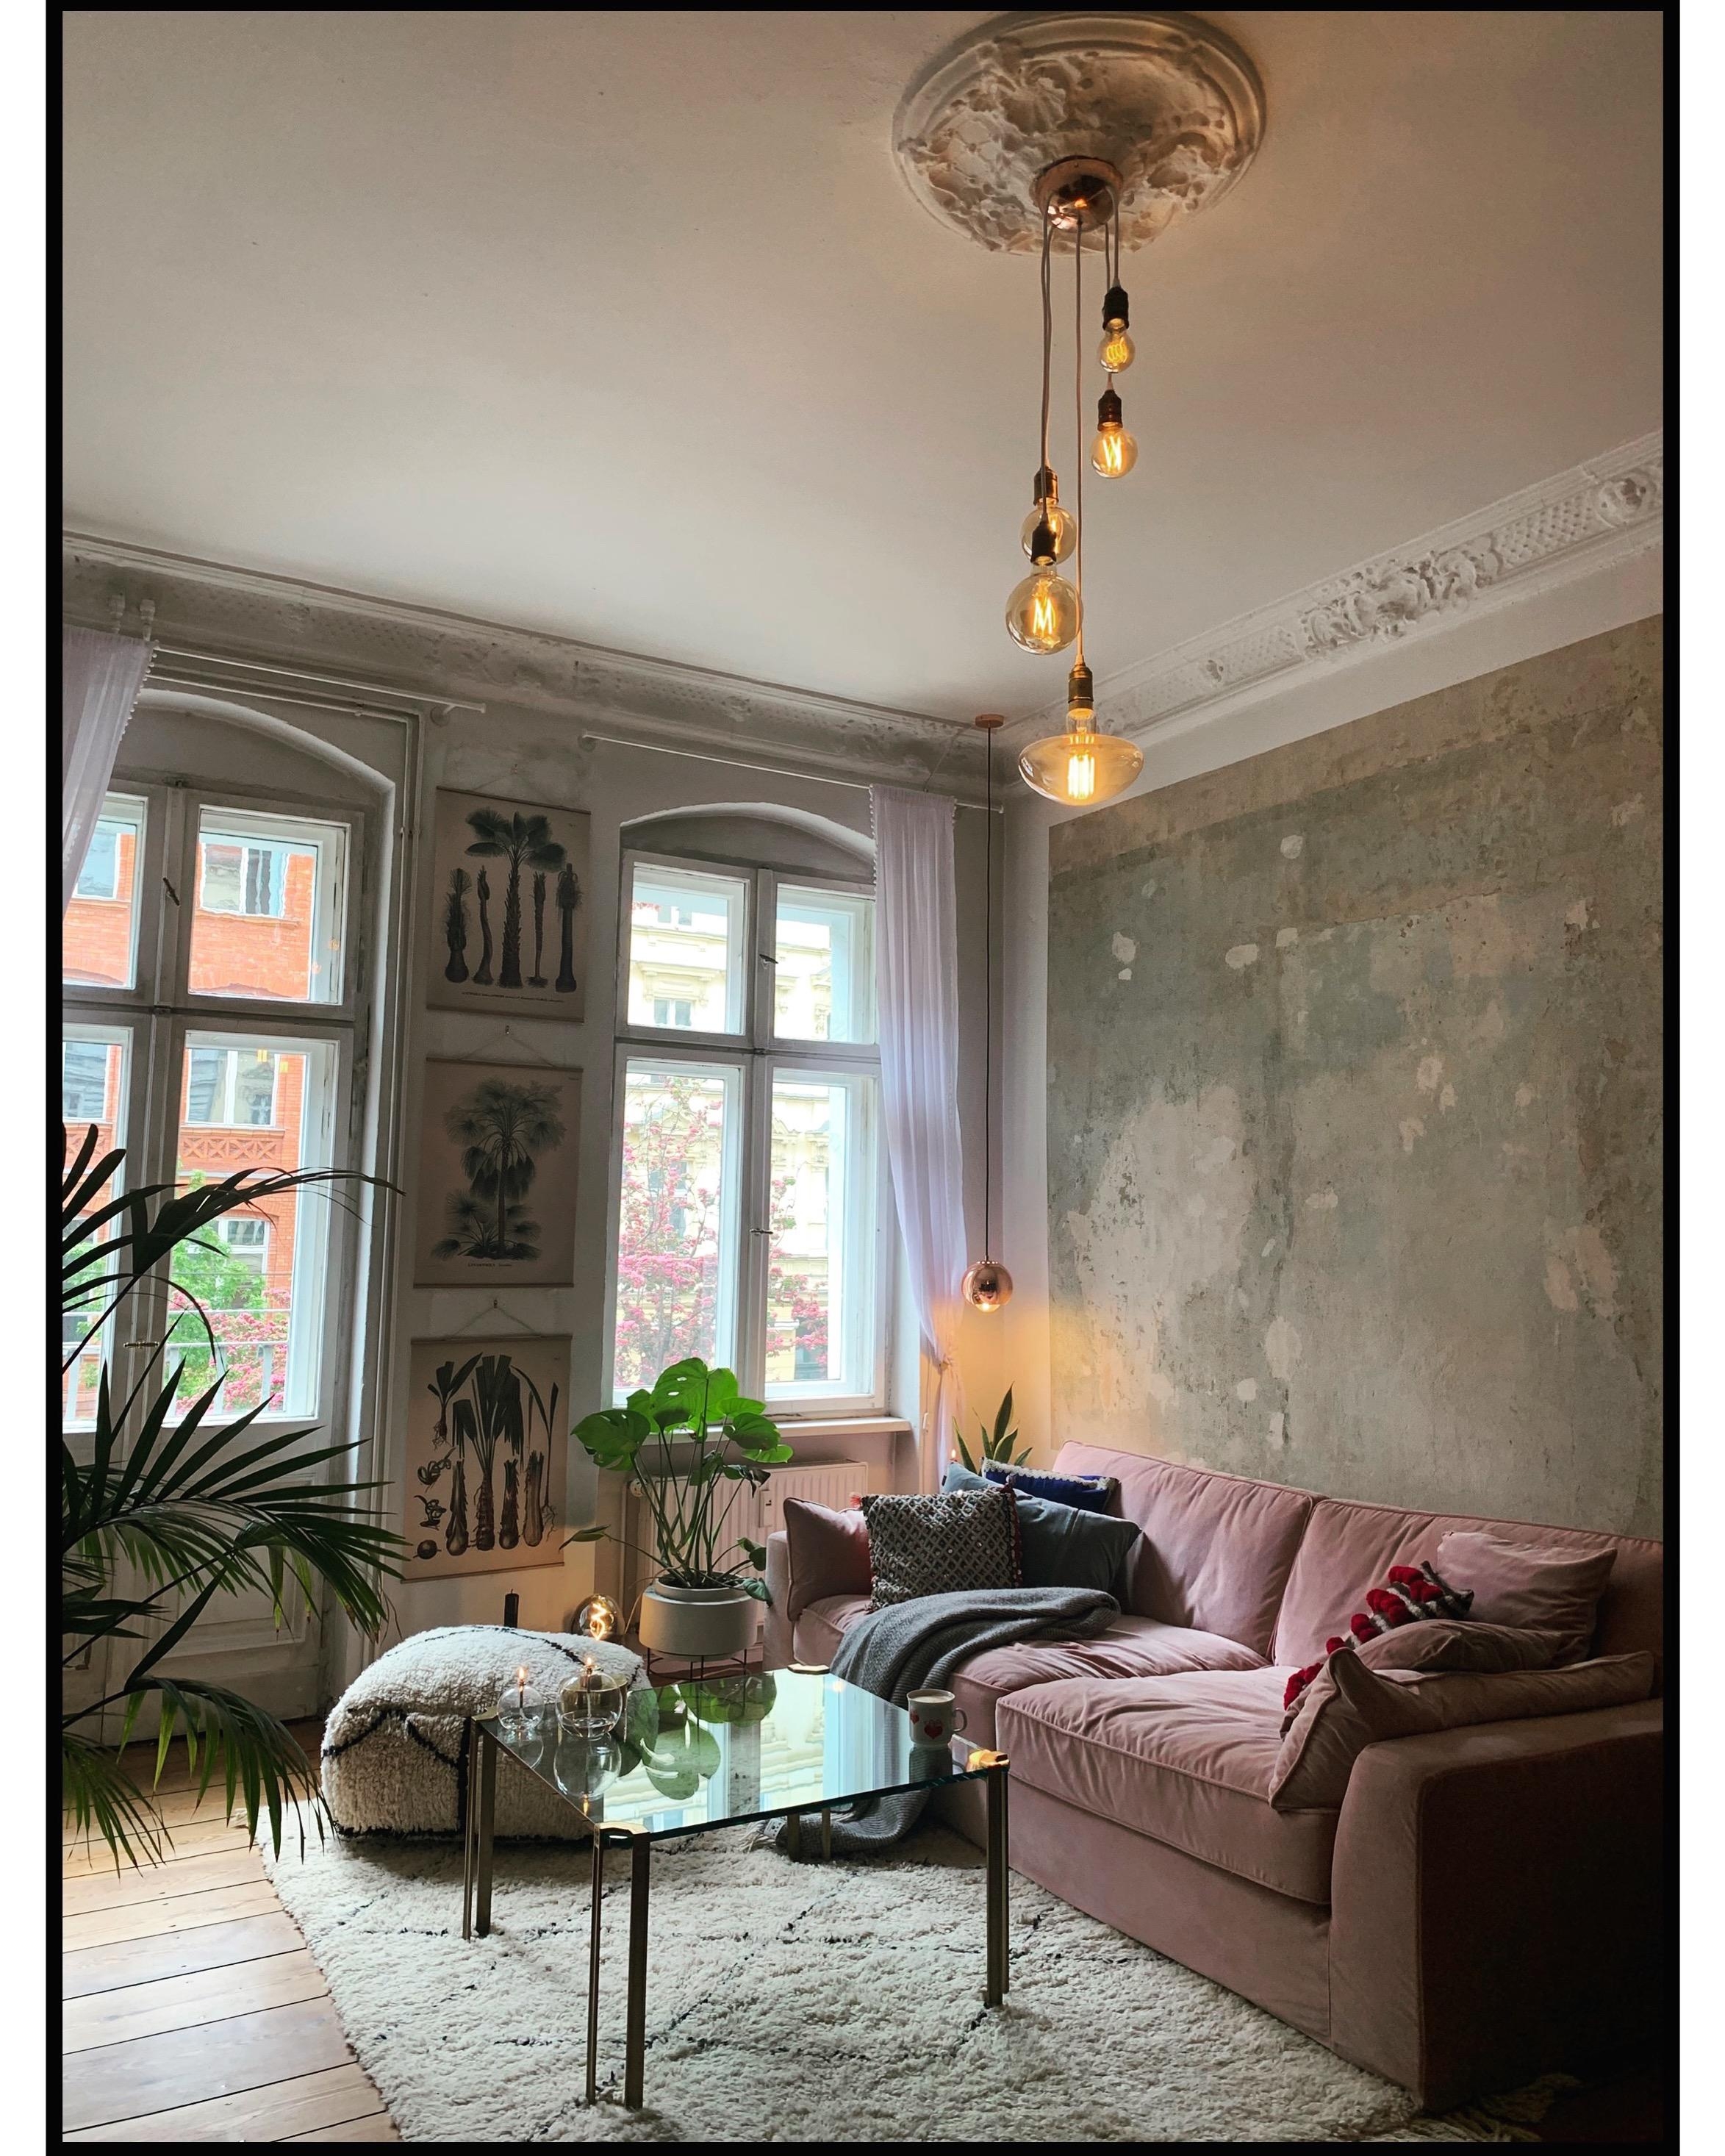 #myhome #home #cozyliving #interior #vintage #scandinavian #interiorlove #livingroom #scandinaviandesign #instalove 